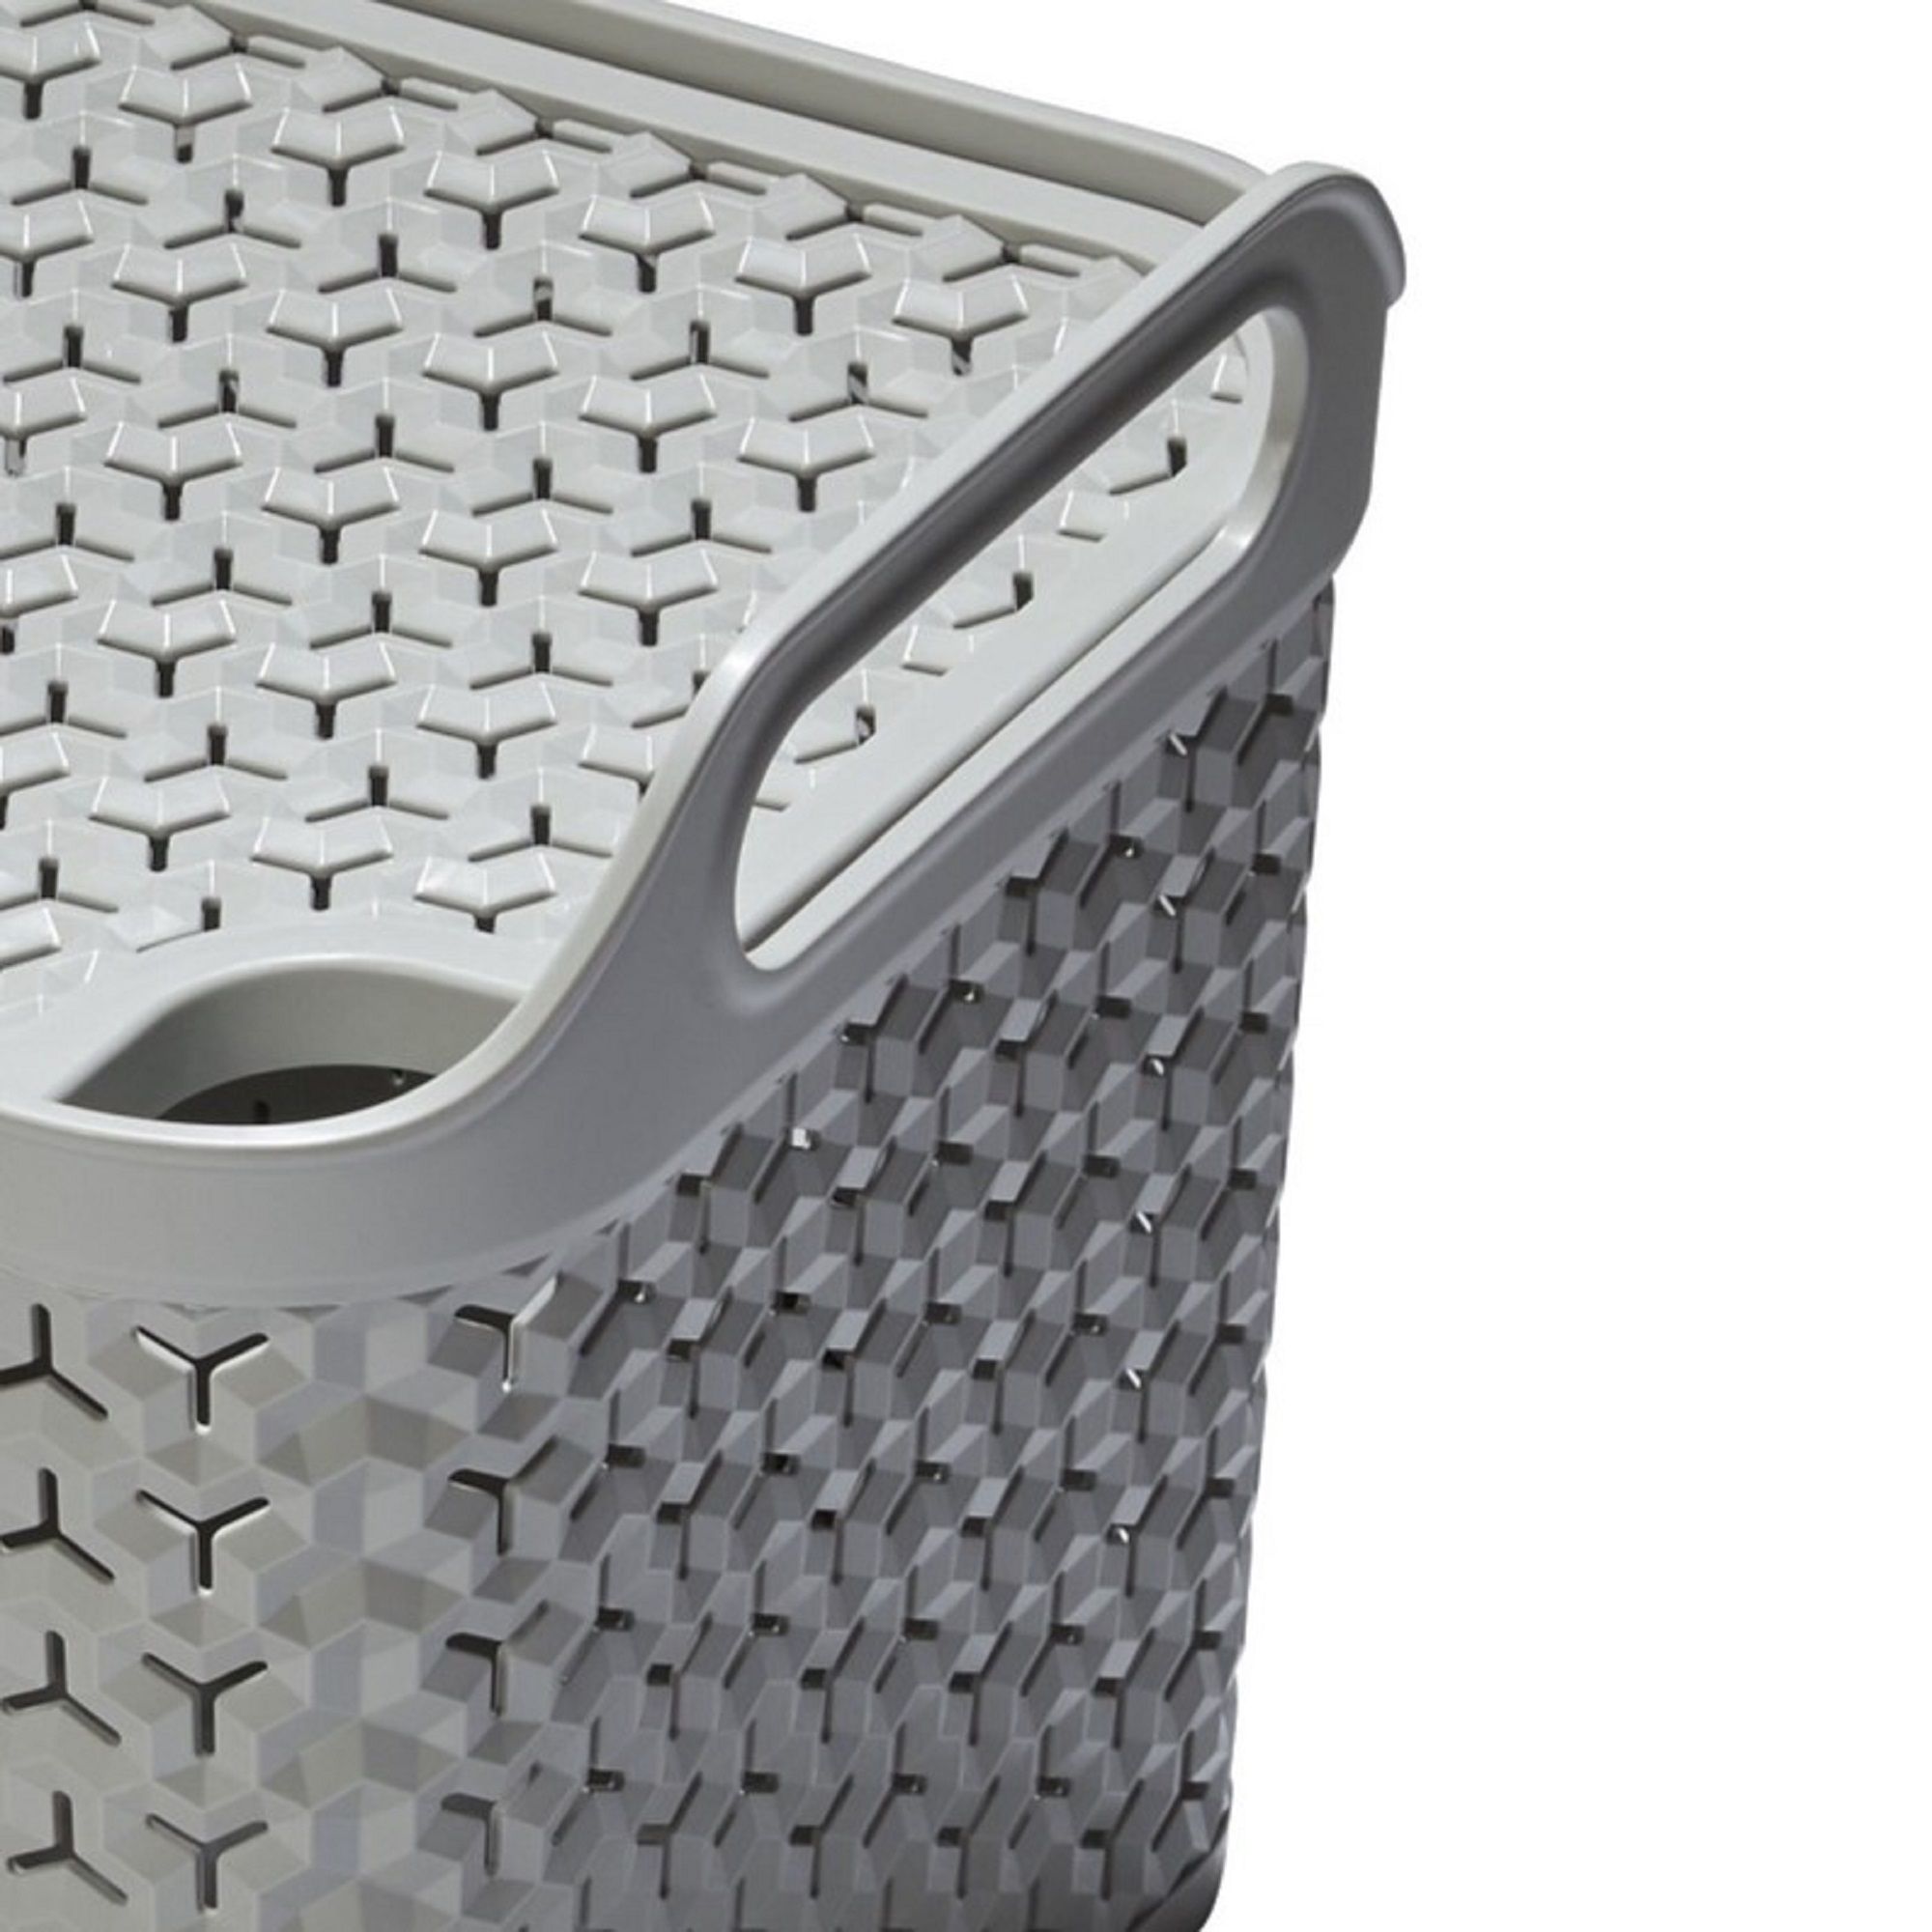 Strata Urban Grey Plastic Stackable Storage basket & Lid (H)23cm (W)23.5cm (D)30.5cm